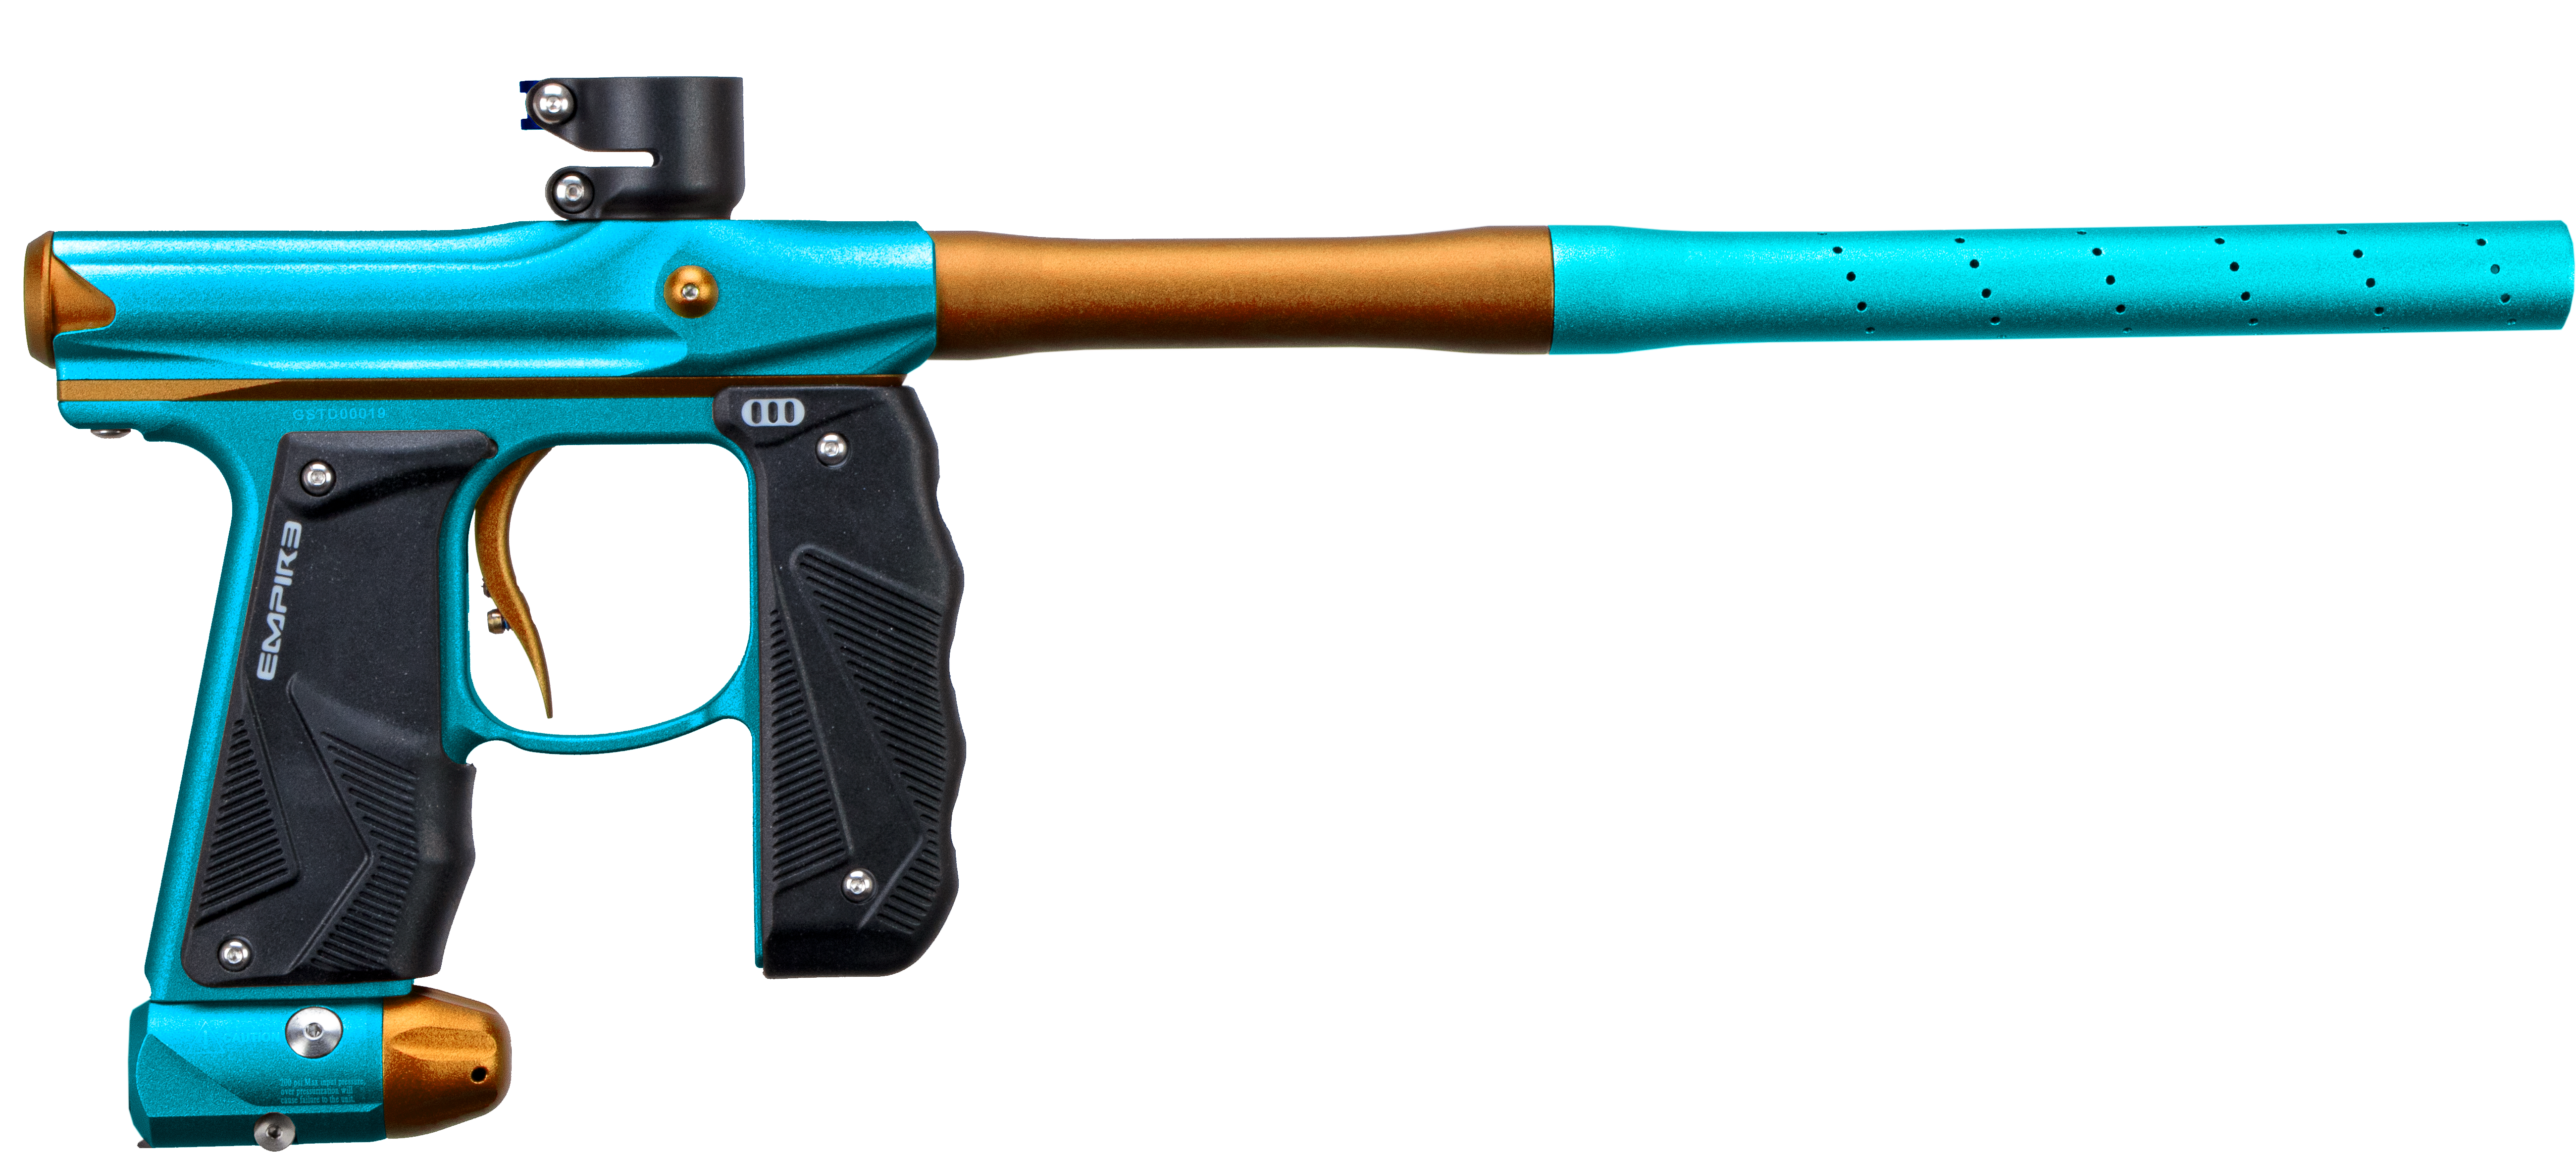 Mini GS Paintball Gun –